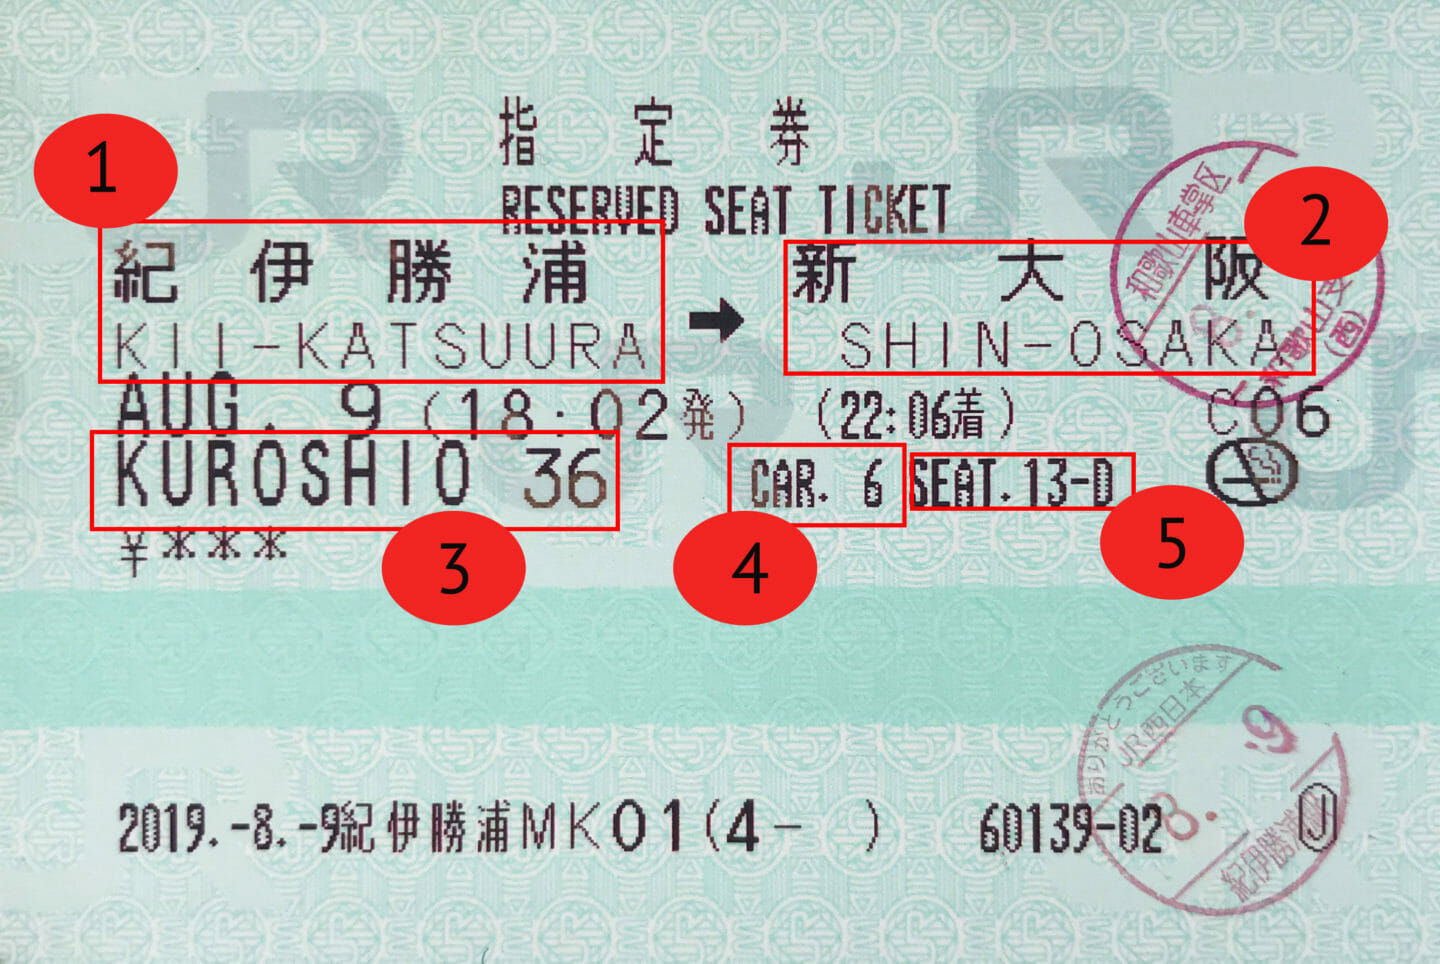 Ticket de asiento reservado JR Pass